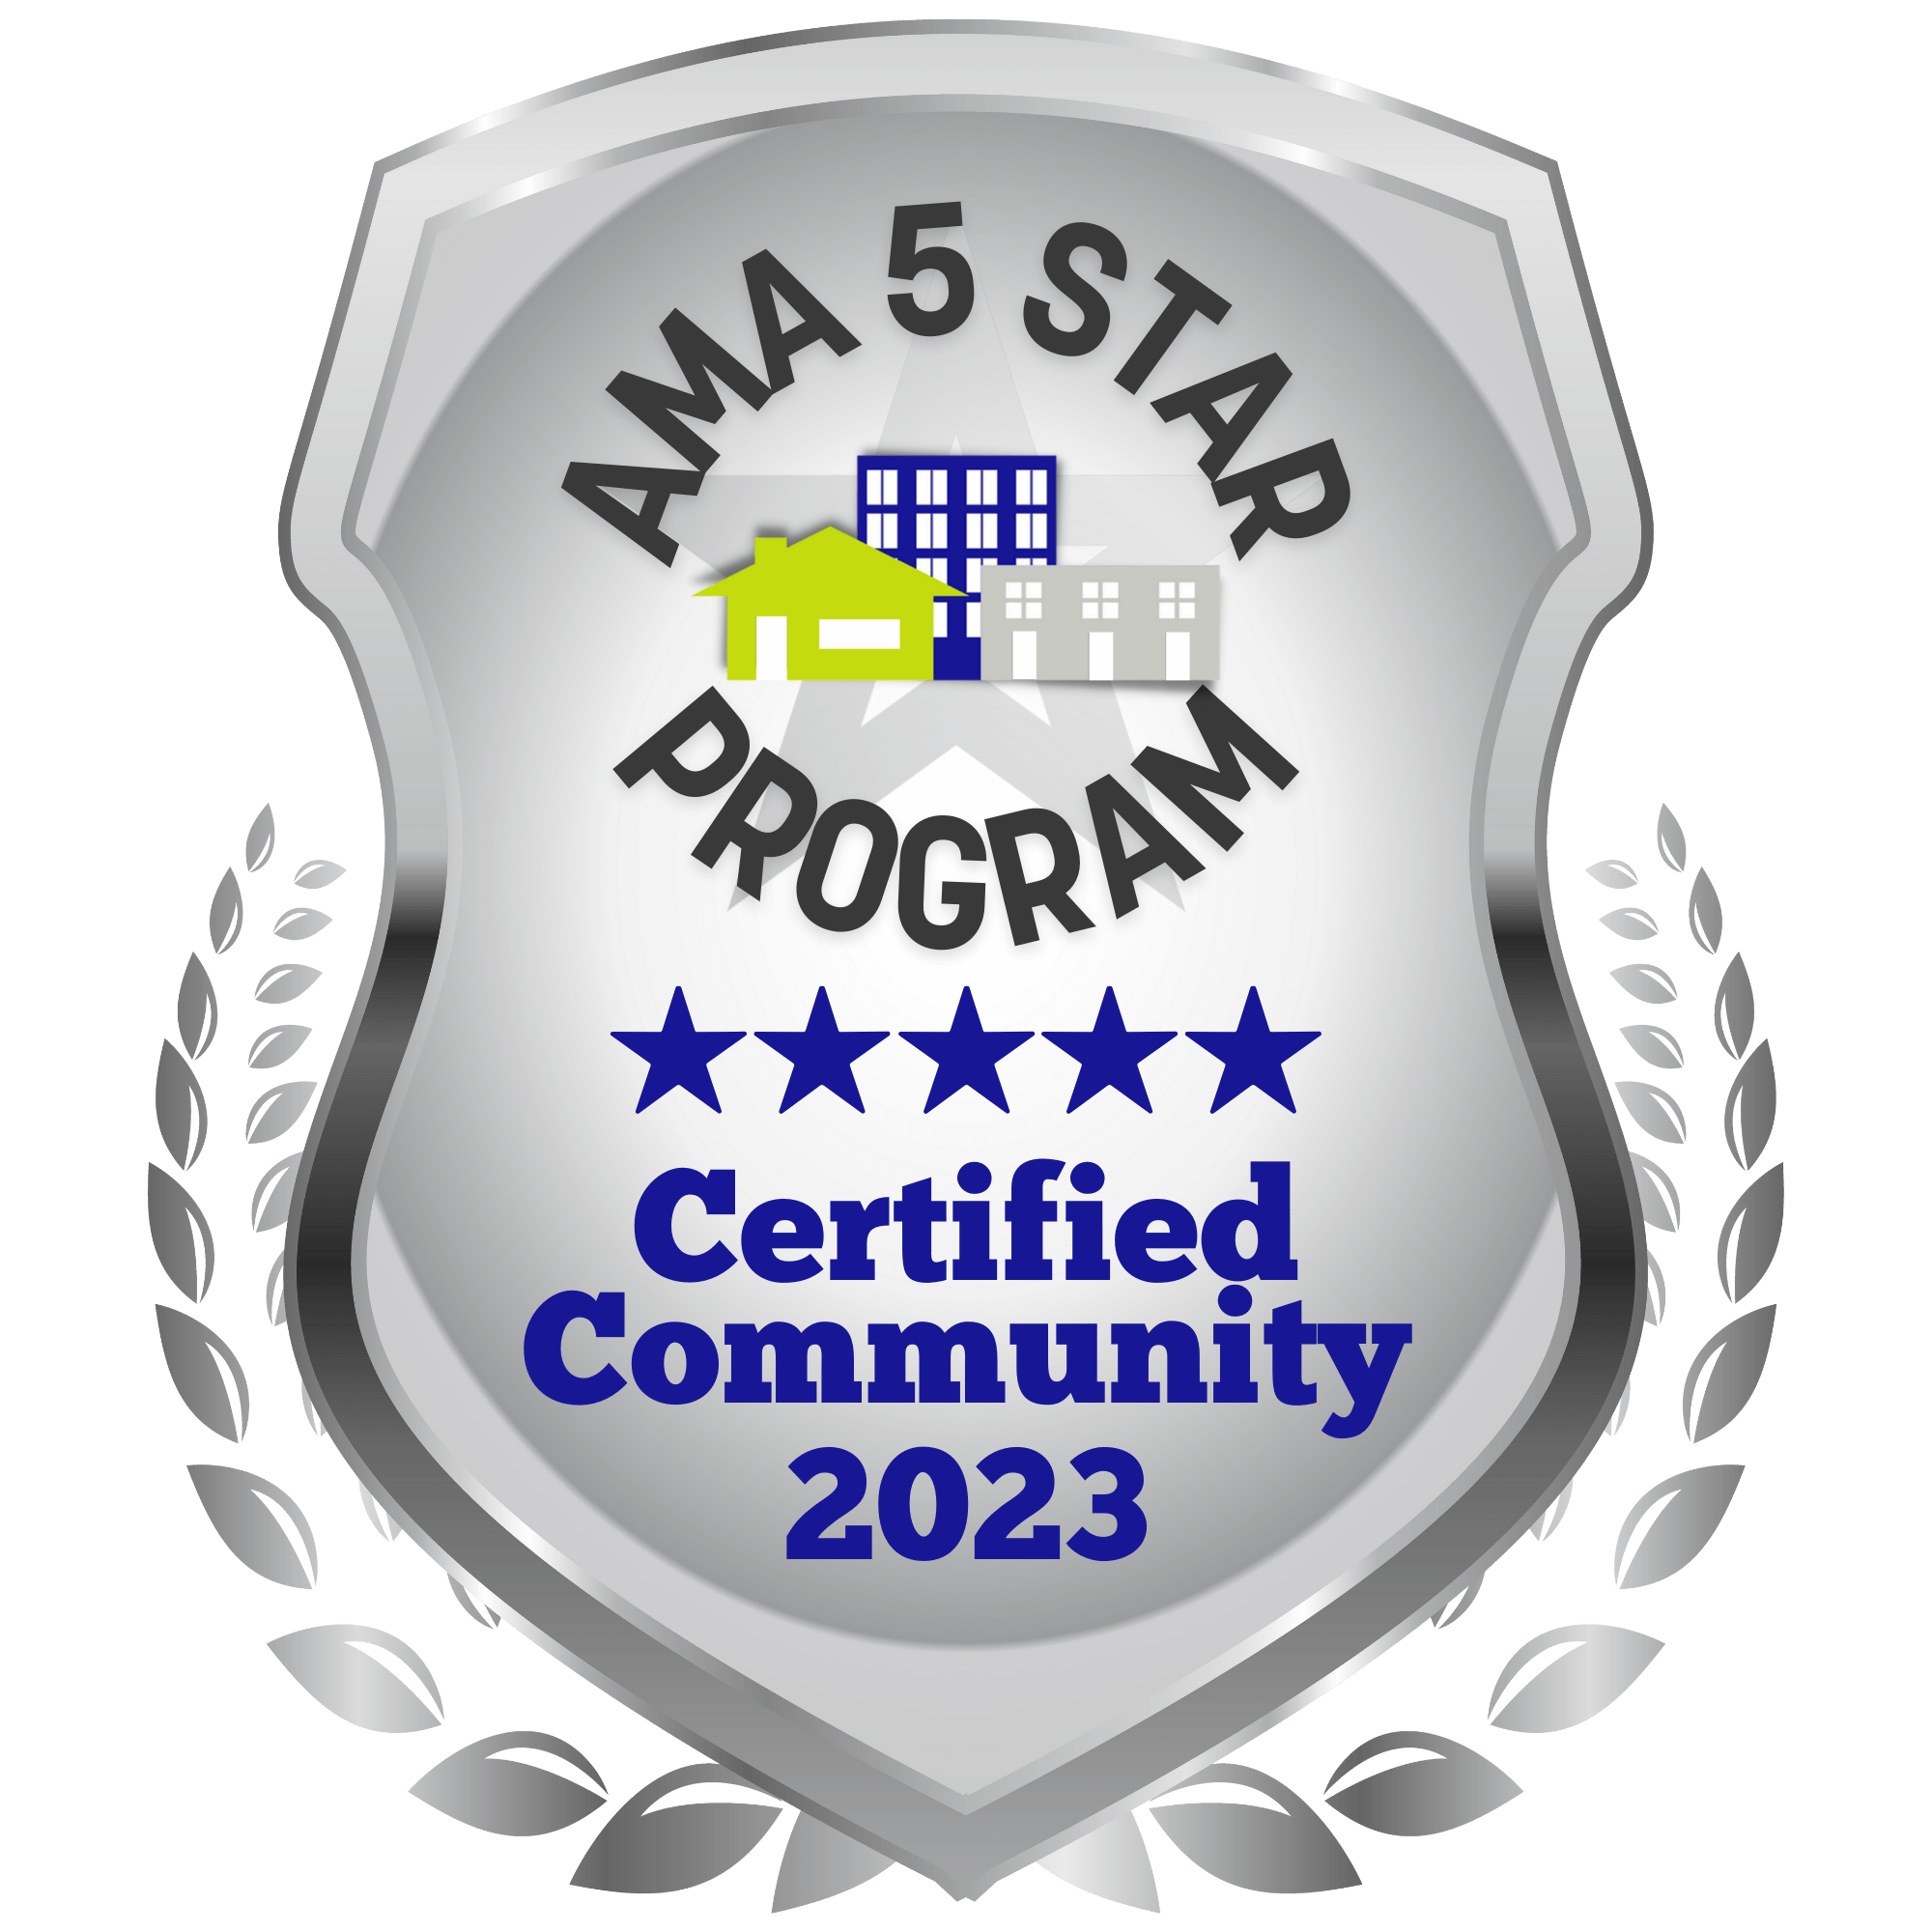 AMA 5 Star Program Certified Community 2023